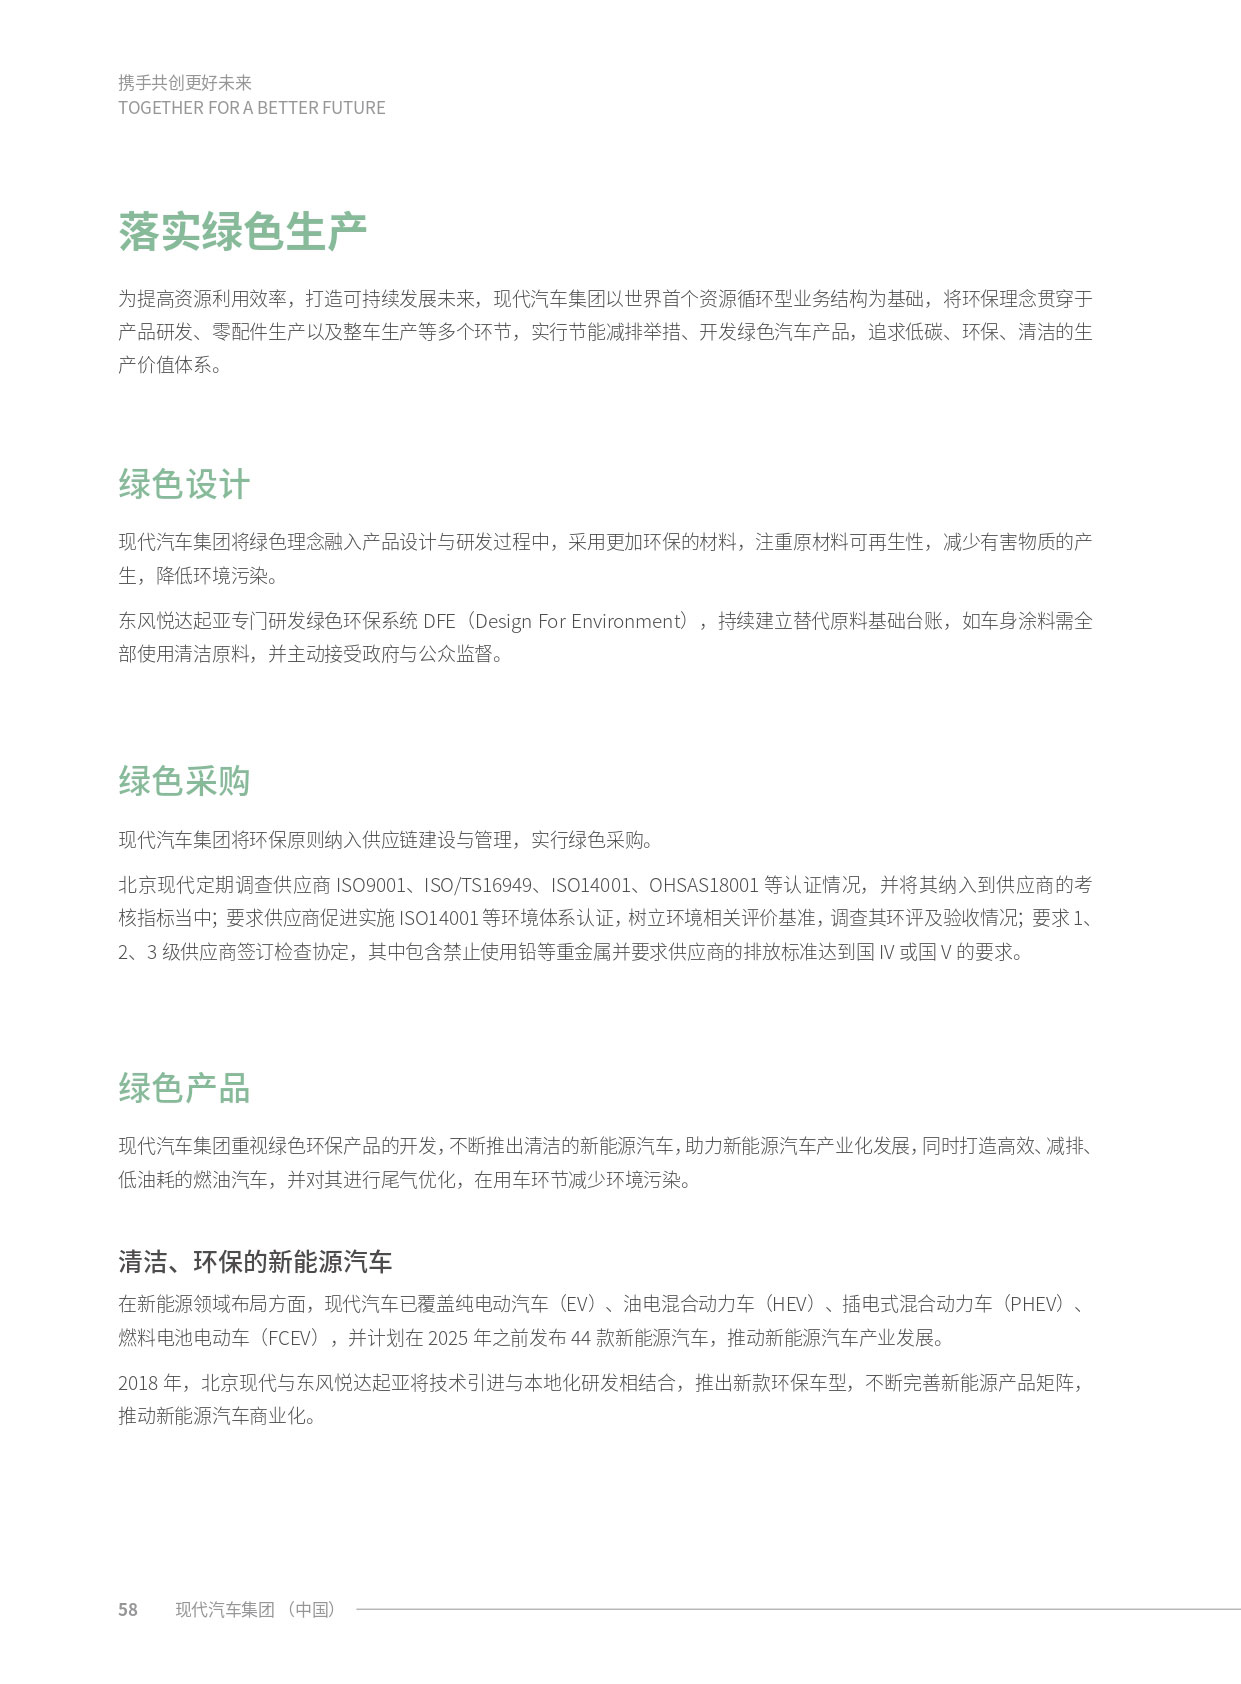 hyundai_china_csr_2018_page-0031_01